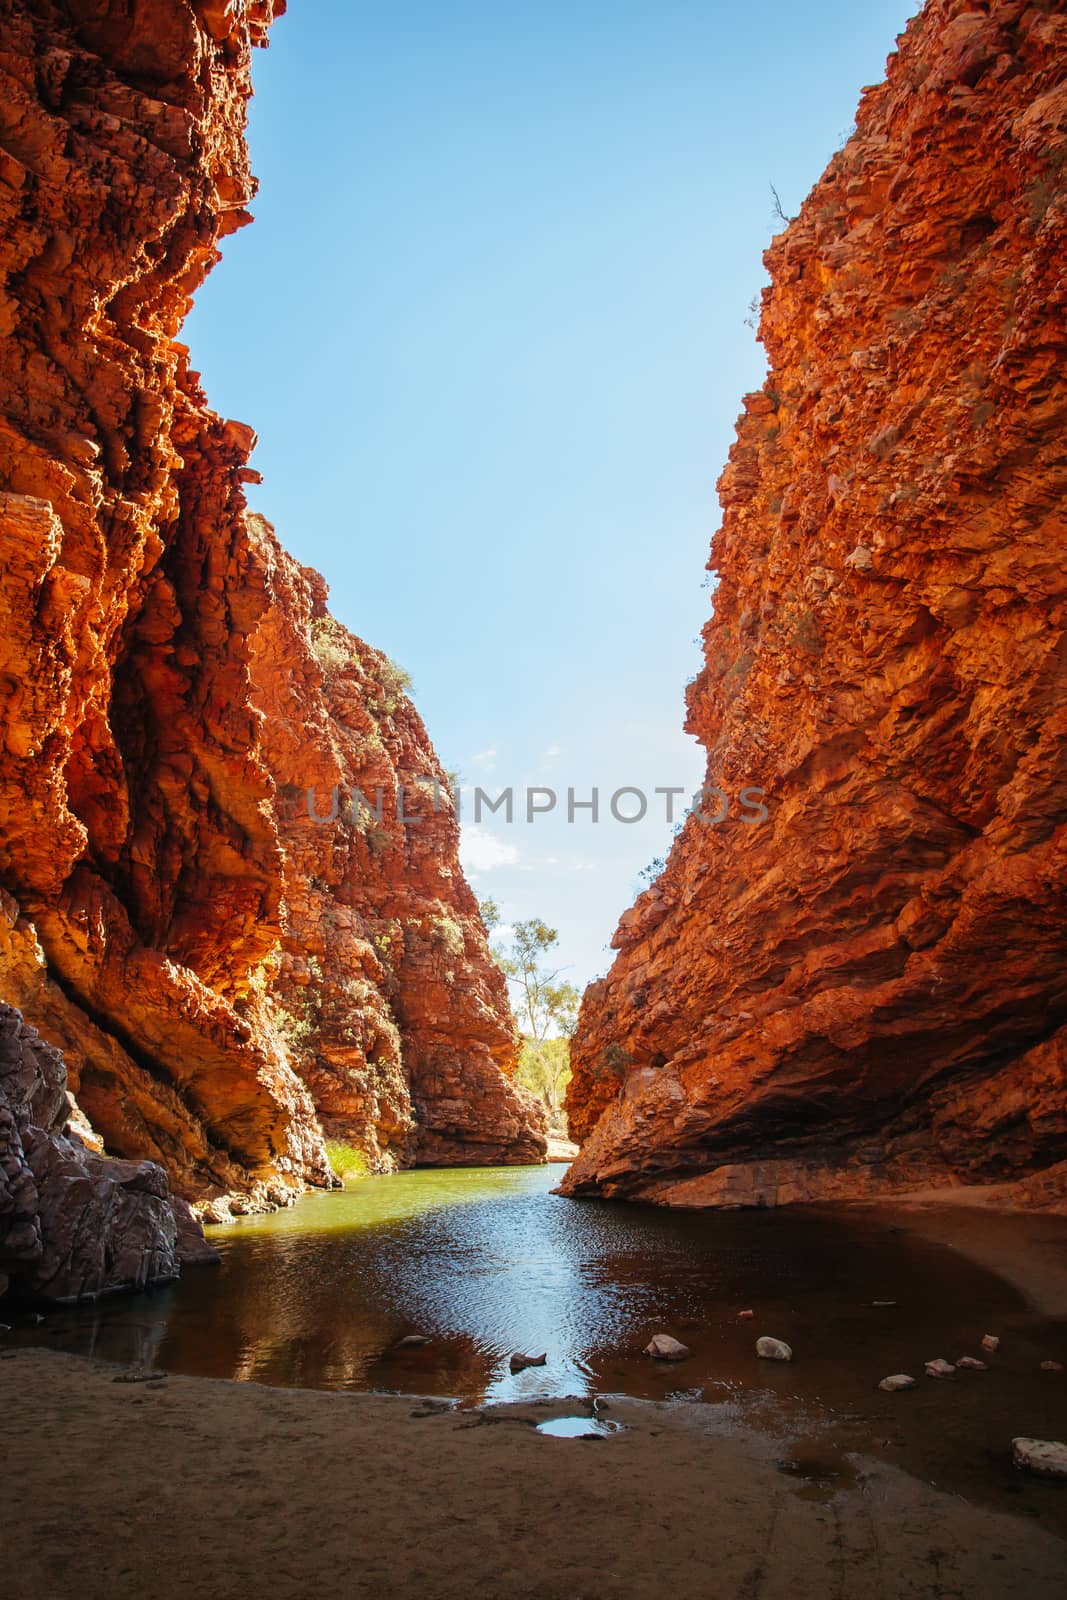 Simpsons Gap near Alice Springs in Australia by FiledIMAGE